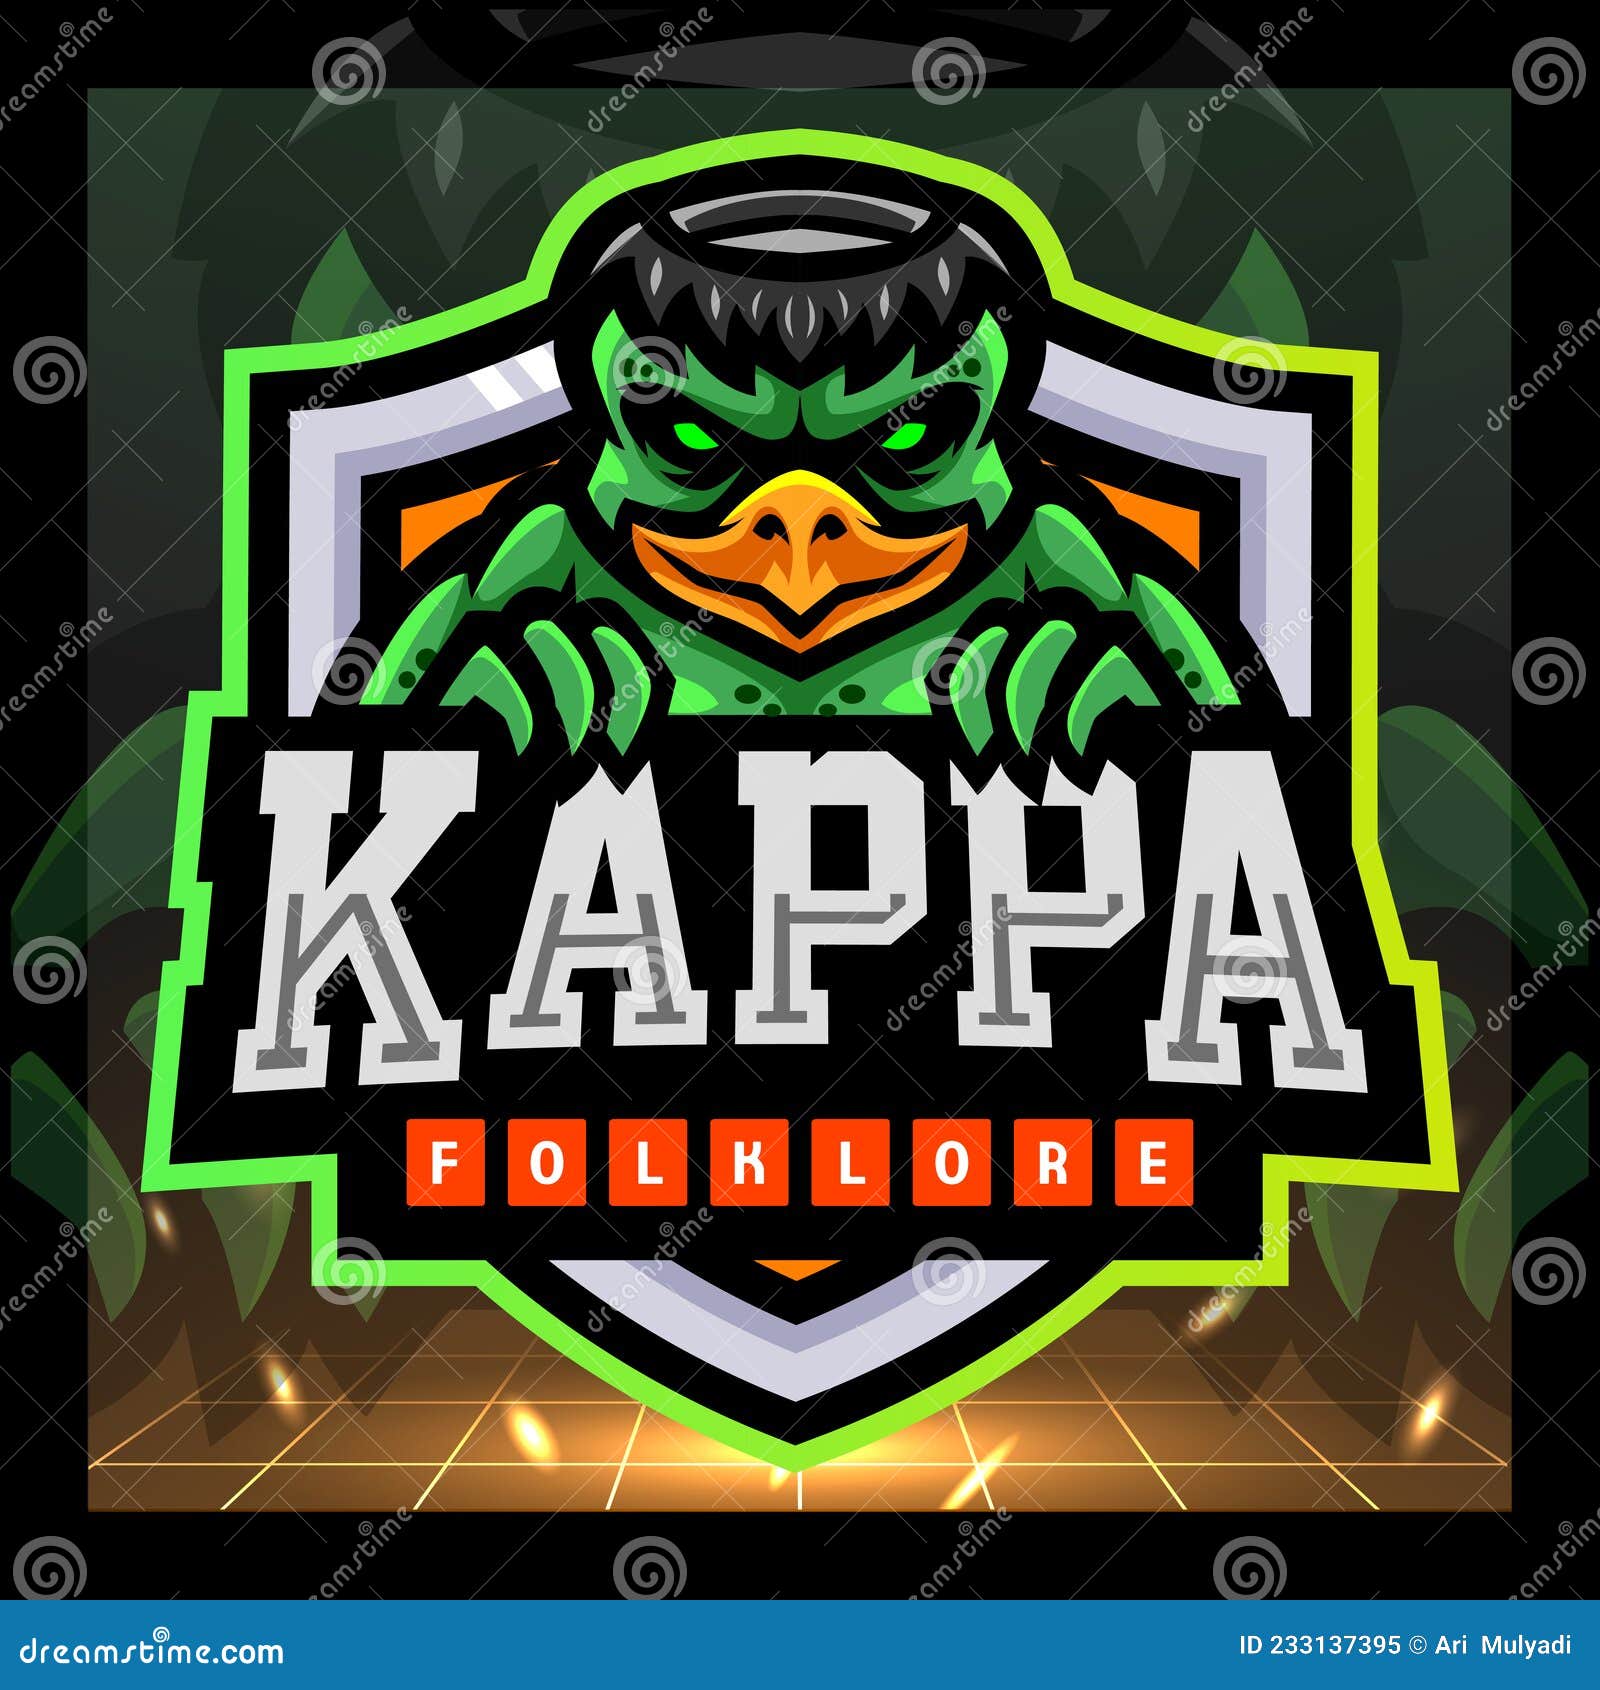 Kappa Logo Stock Illustrations – 67 Kappa Logo Stock Illustrations, Clipart - Dreamstime